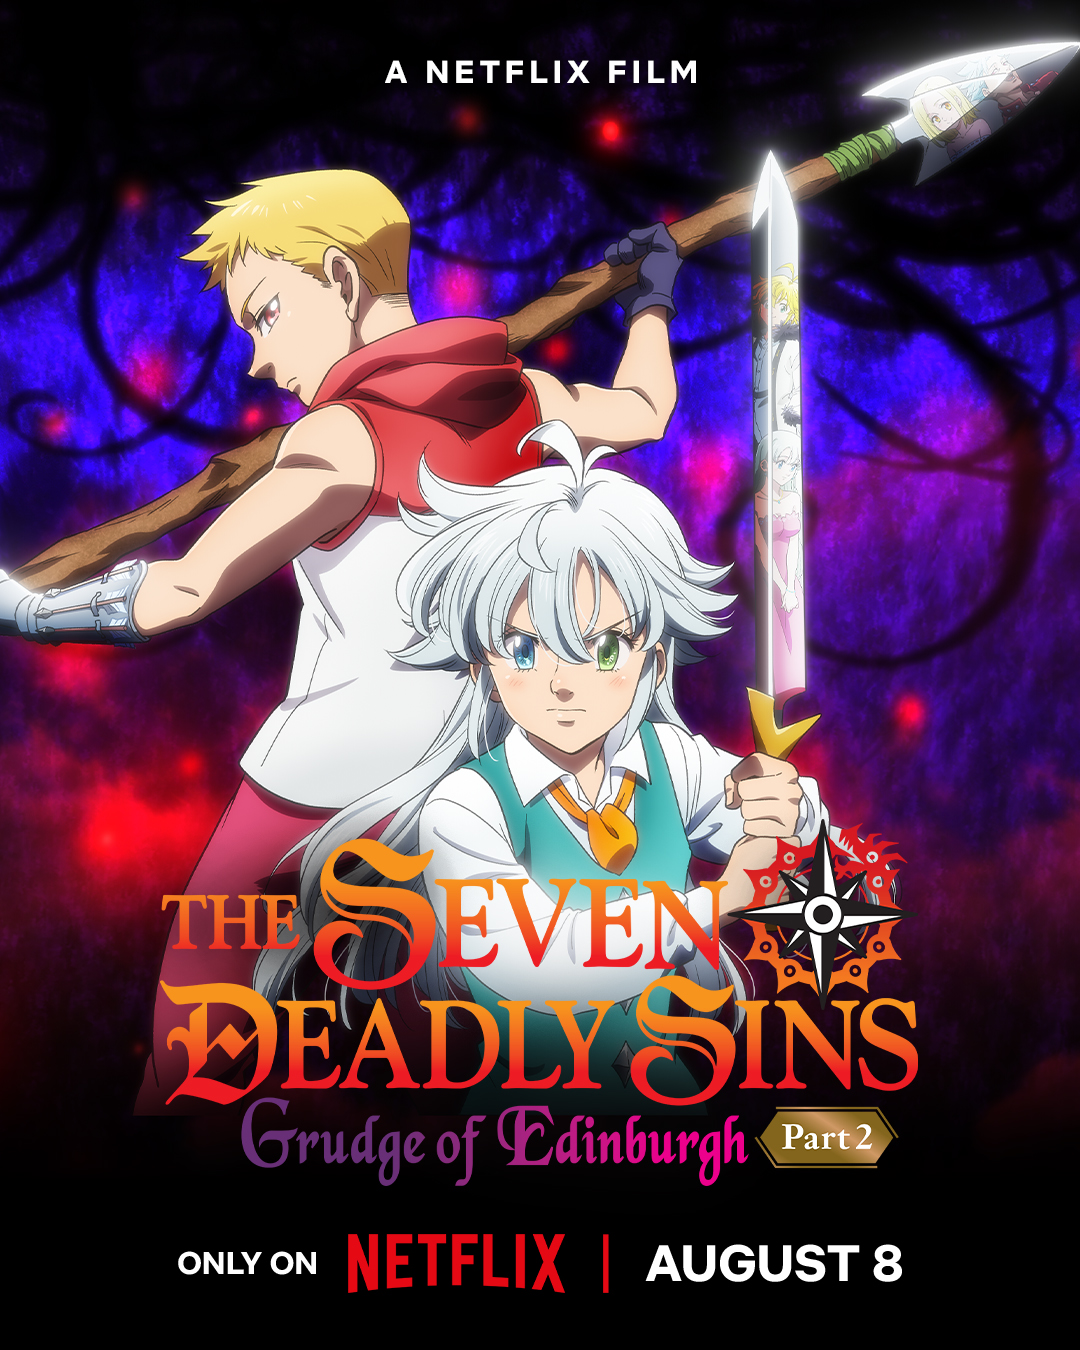 The Seven Deadly Sins: Grudge of Edinburgh part 2